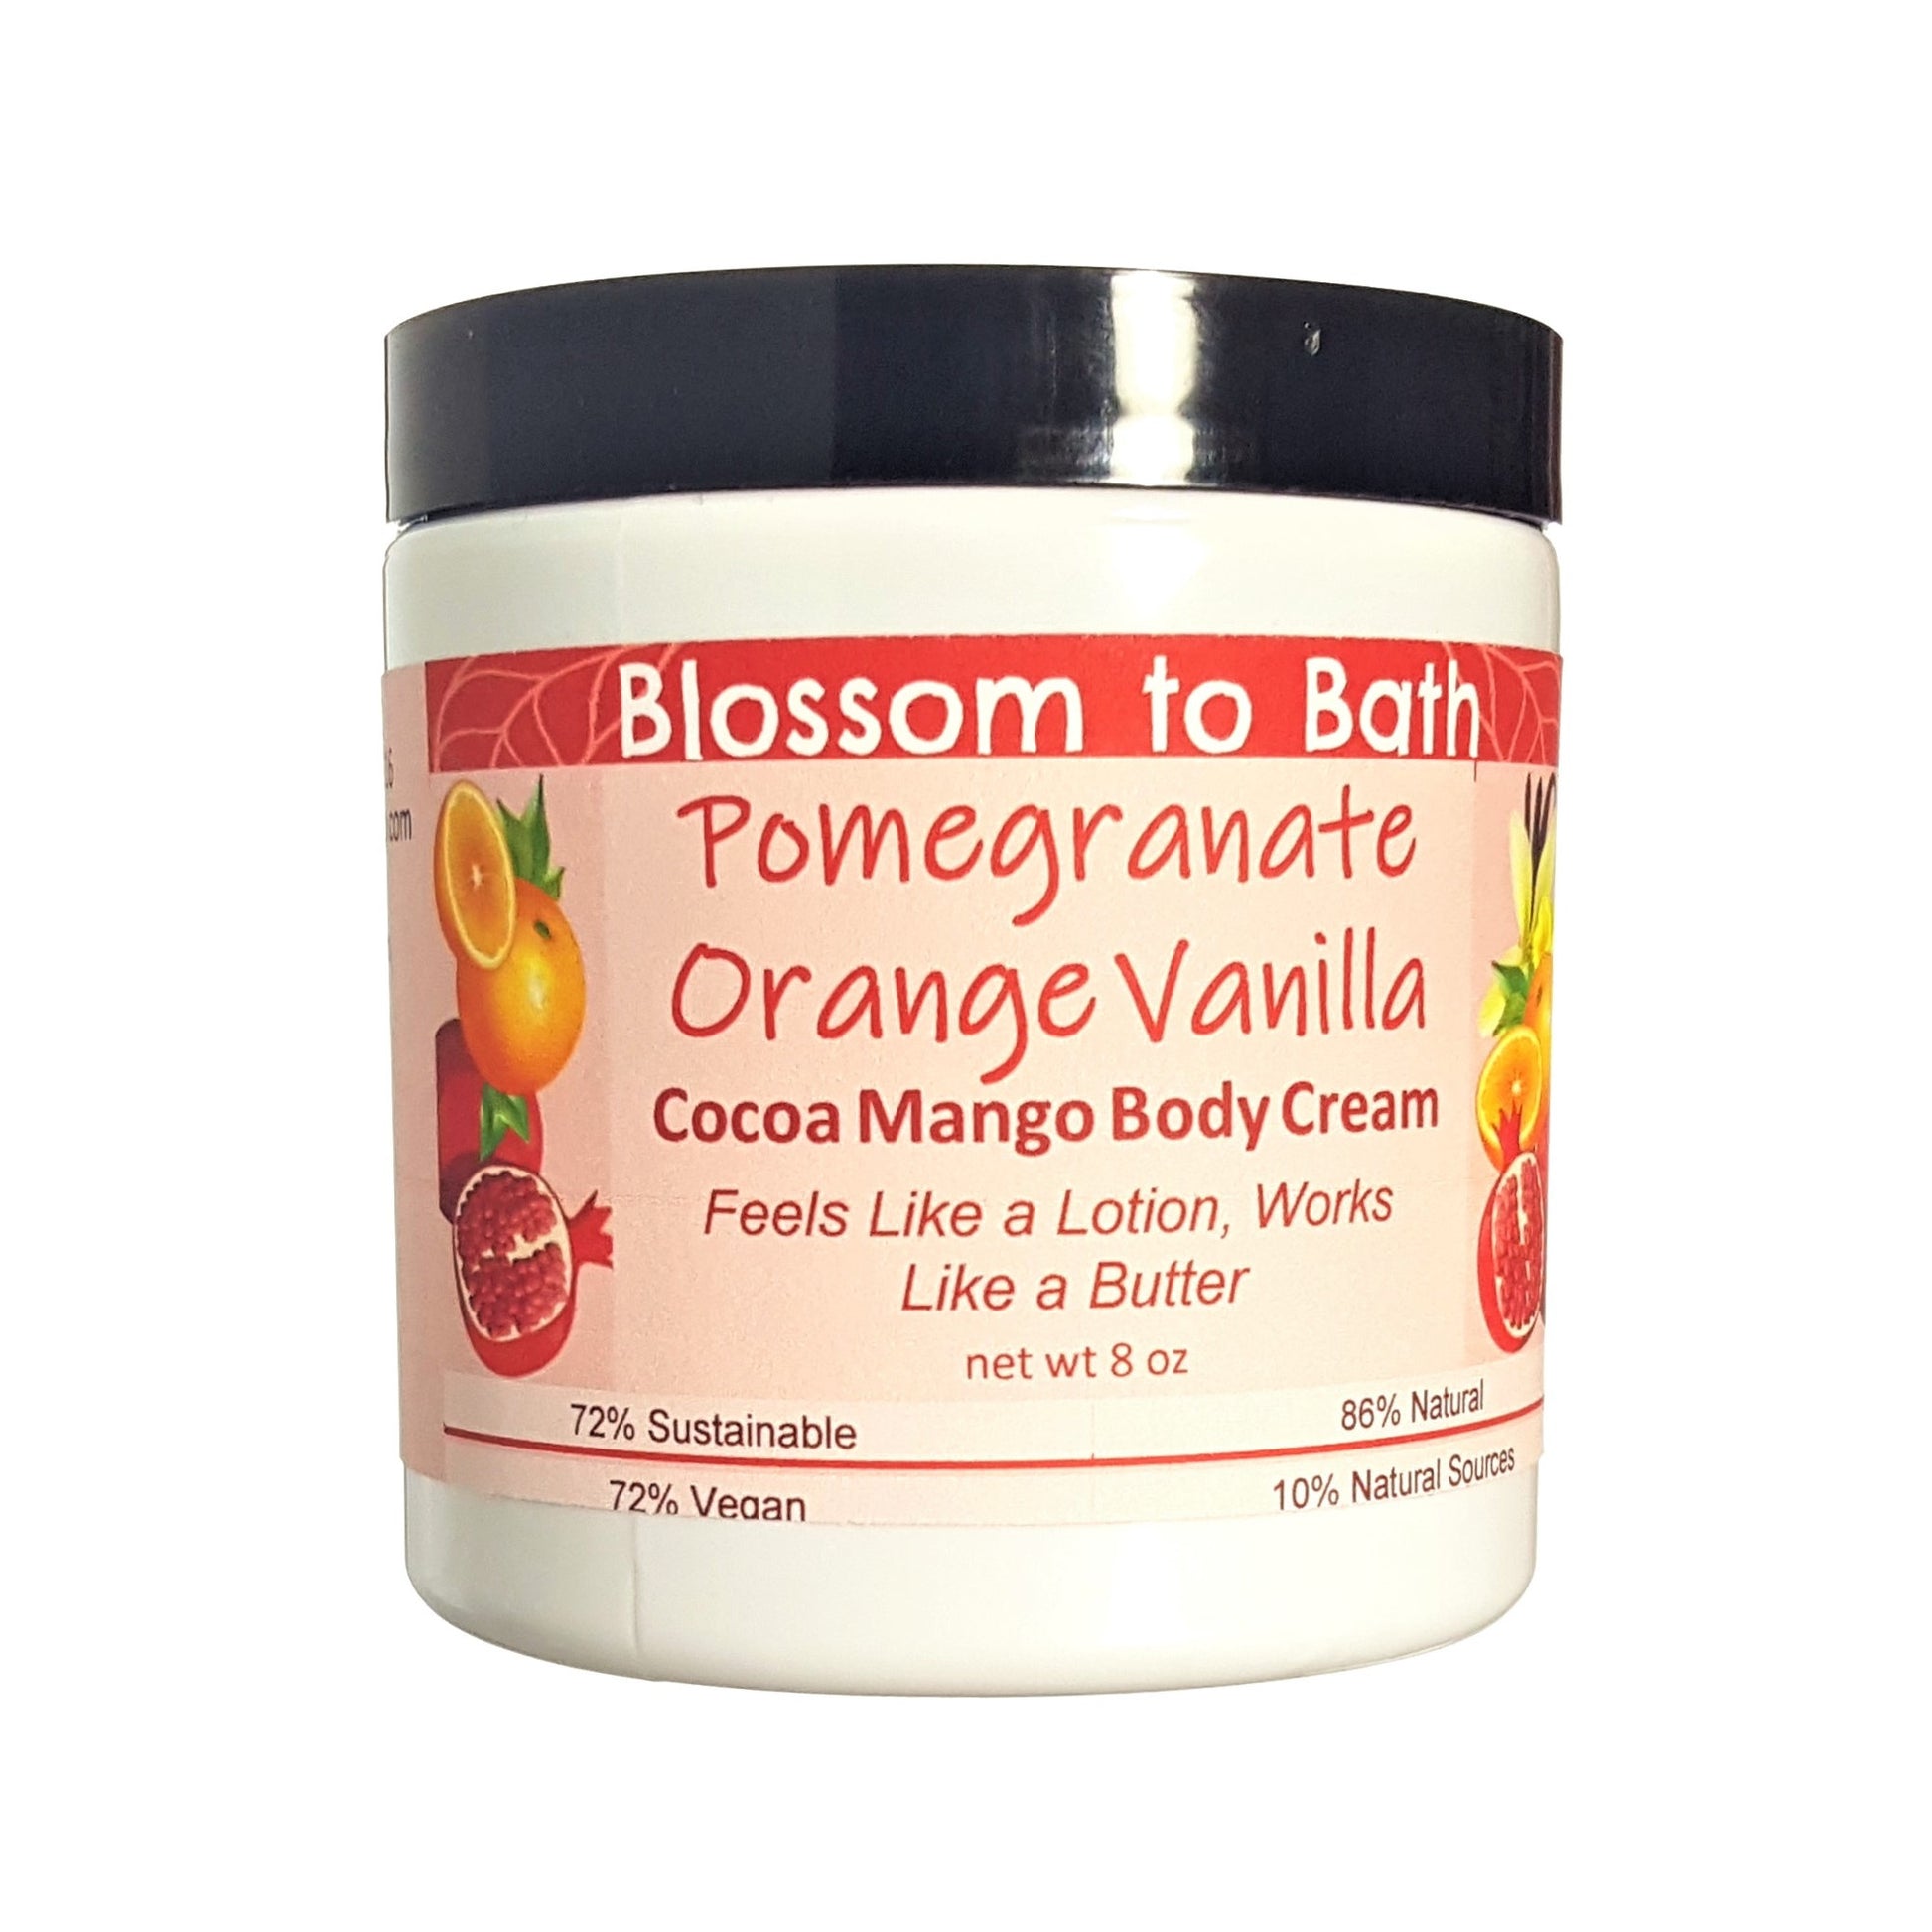 Buy Blossom to Bath Pomegranate Orange Vanilla Cocoa Mango Body Cream from Flowersong Soap Studio.  Rich organic butters luxury soften and moisturize even the roughest skin all day  